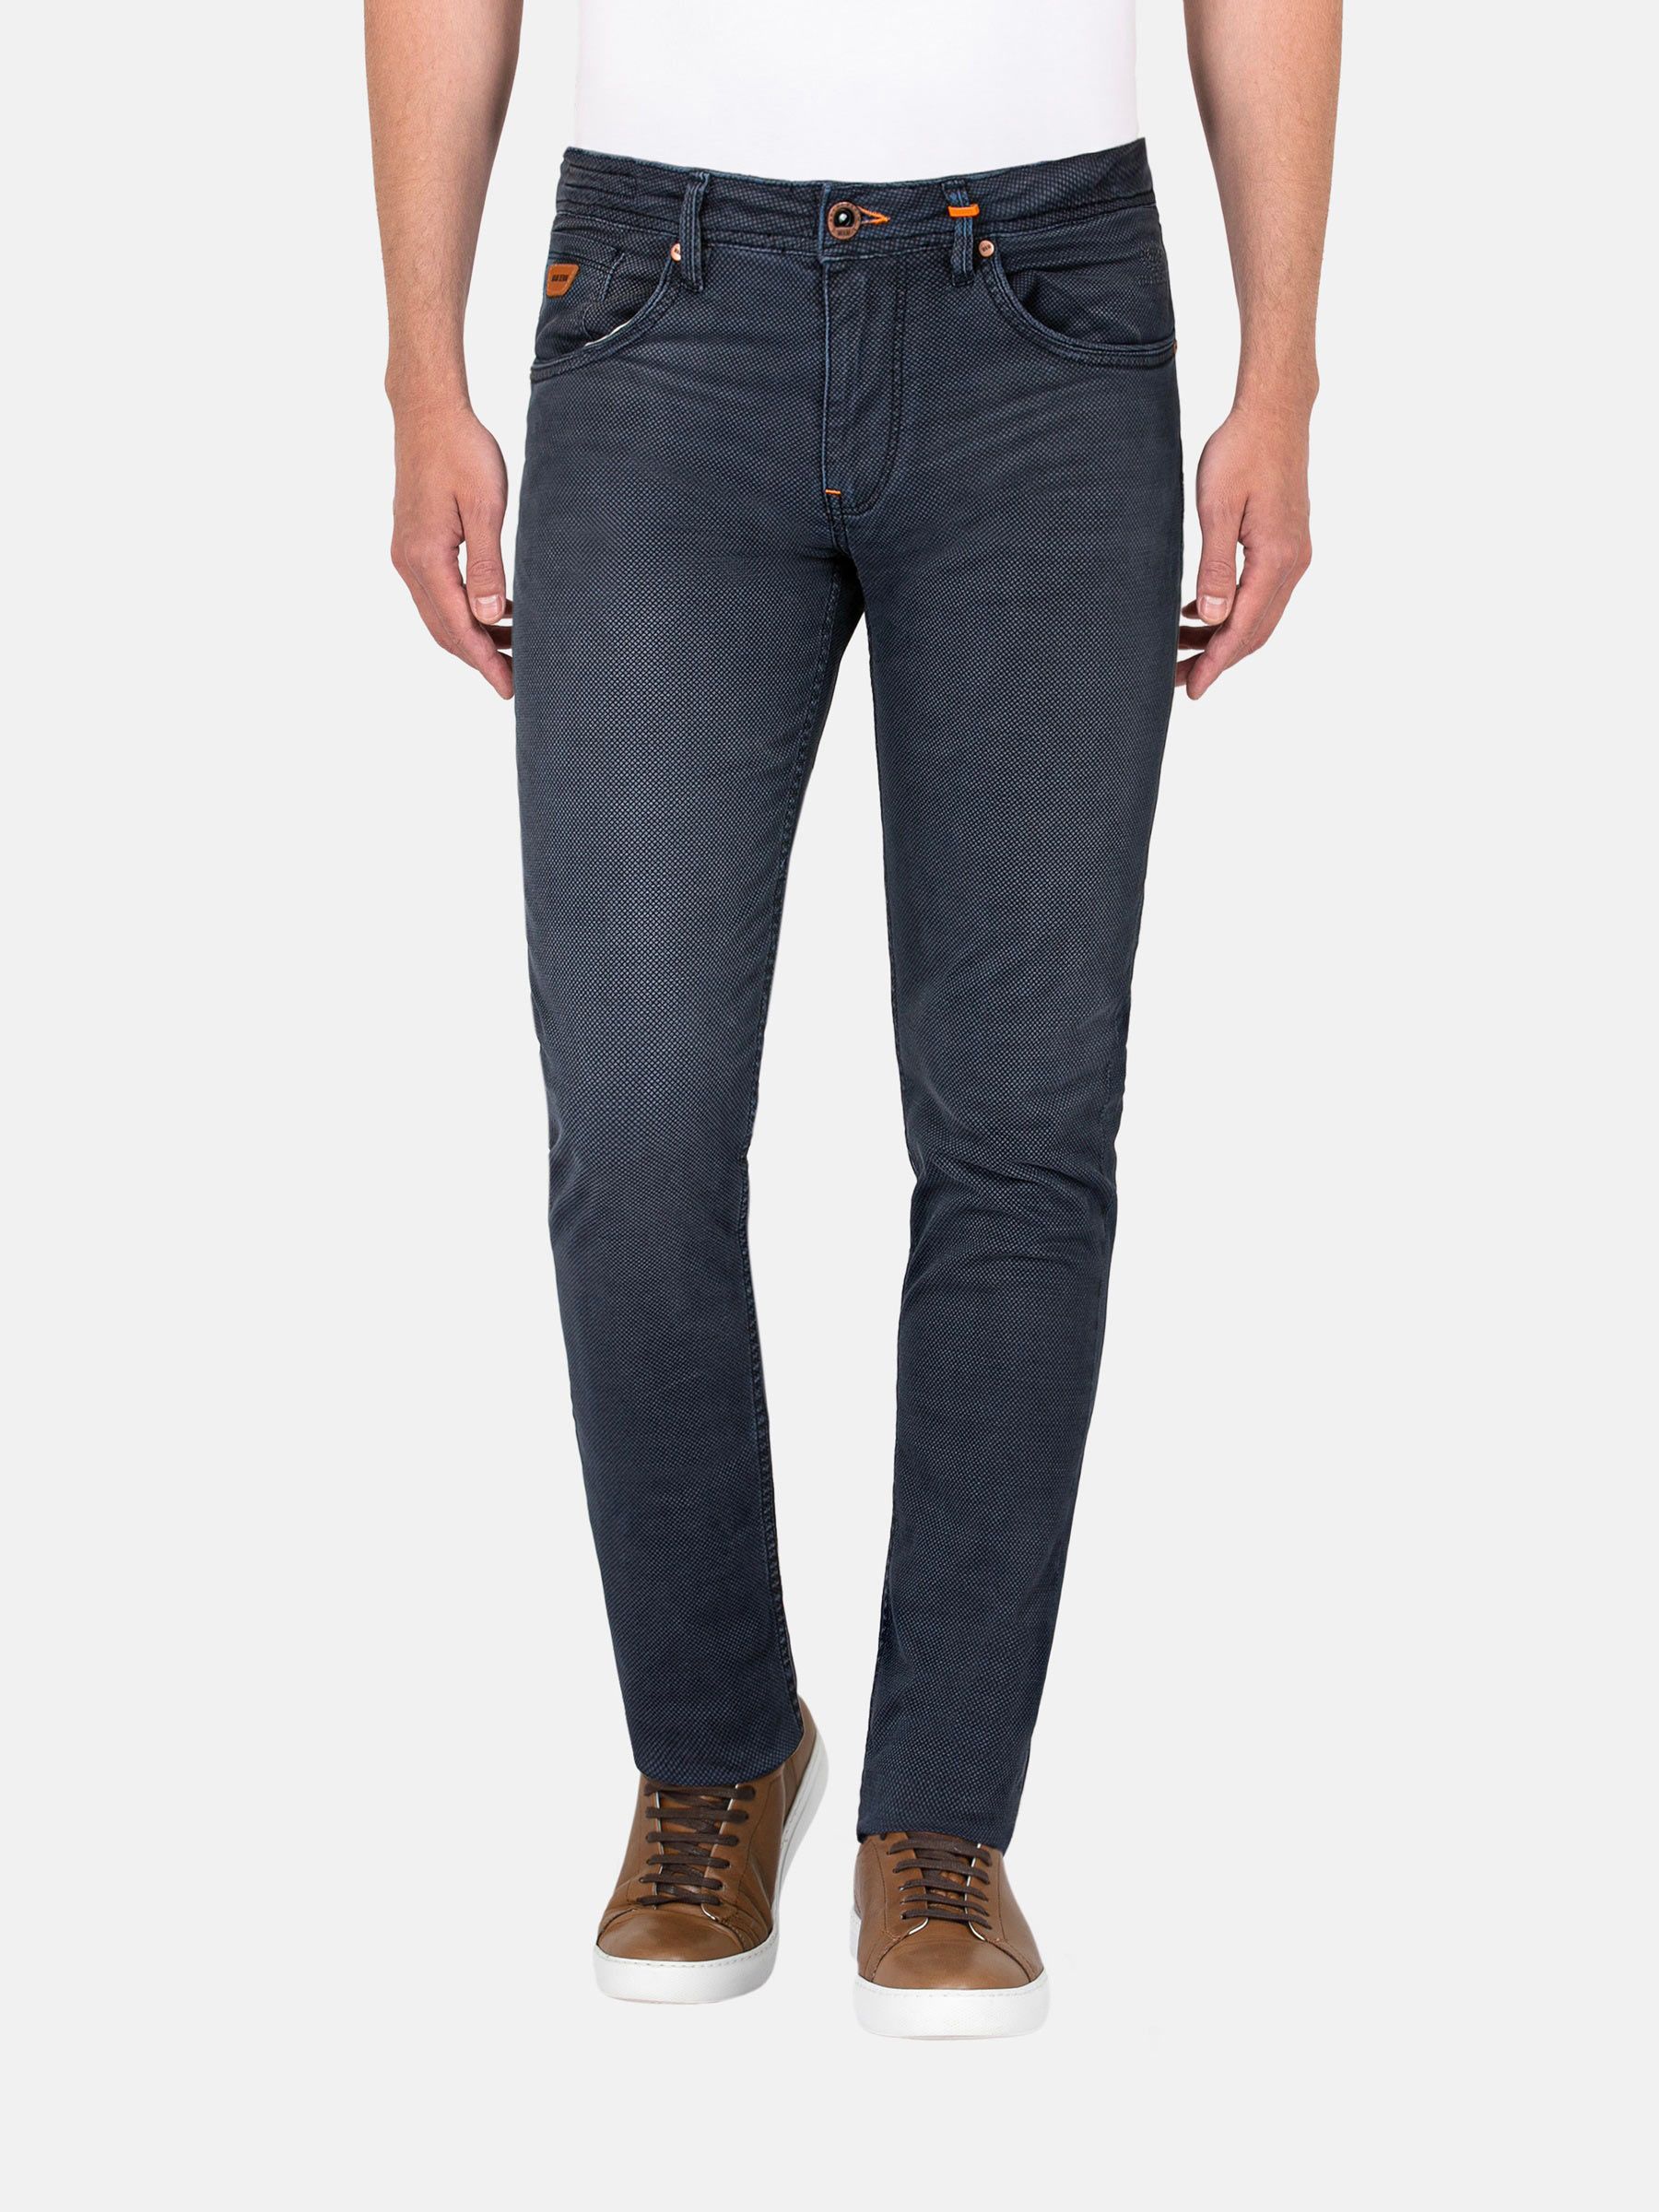 Mini Check Slim Fit Navy Jeans - Men's Checkered Denim - Slim Fit